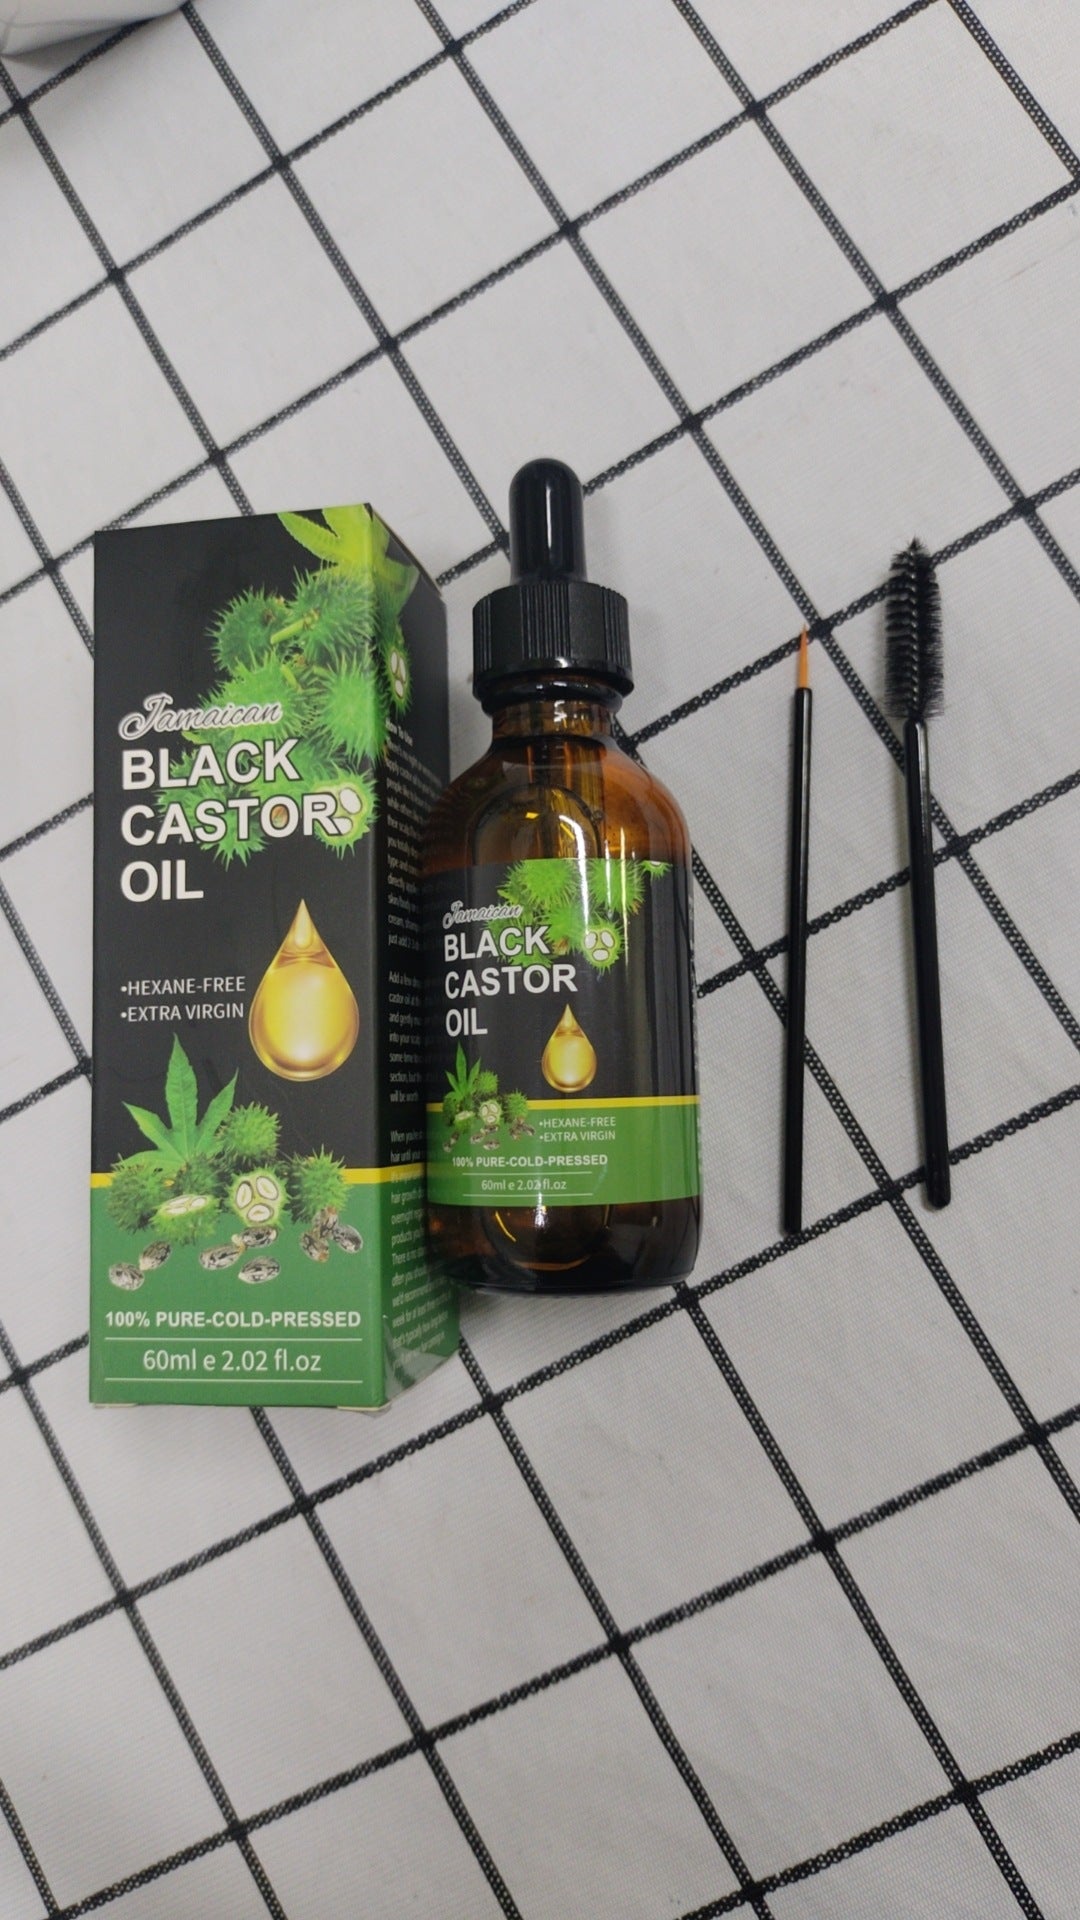 Jamaica Black Castor Oil Soothing Oil